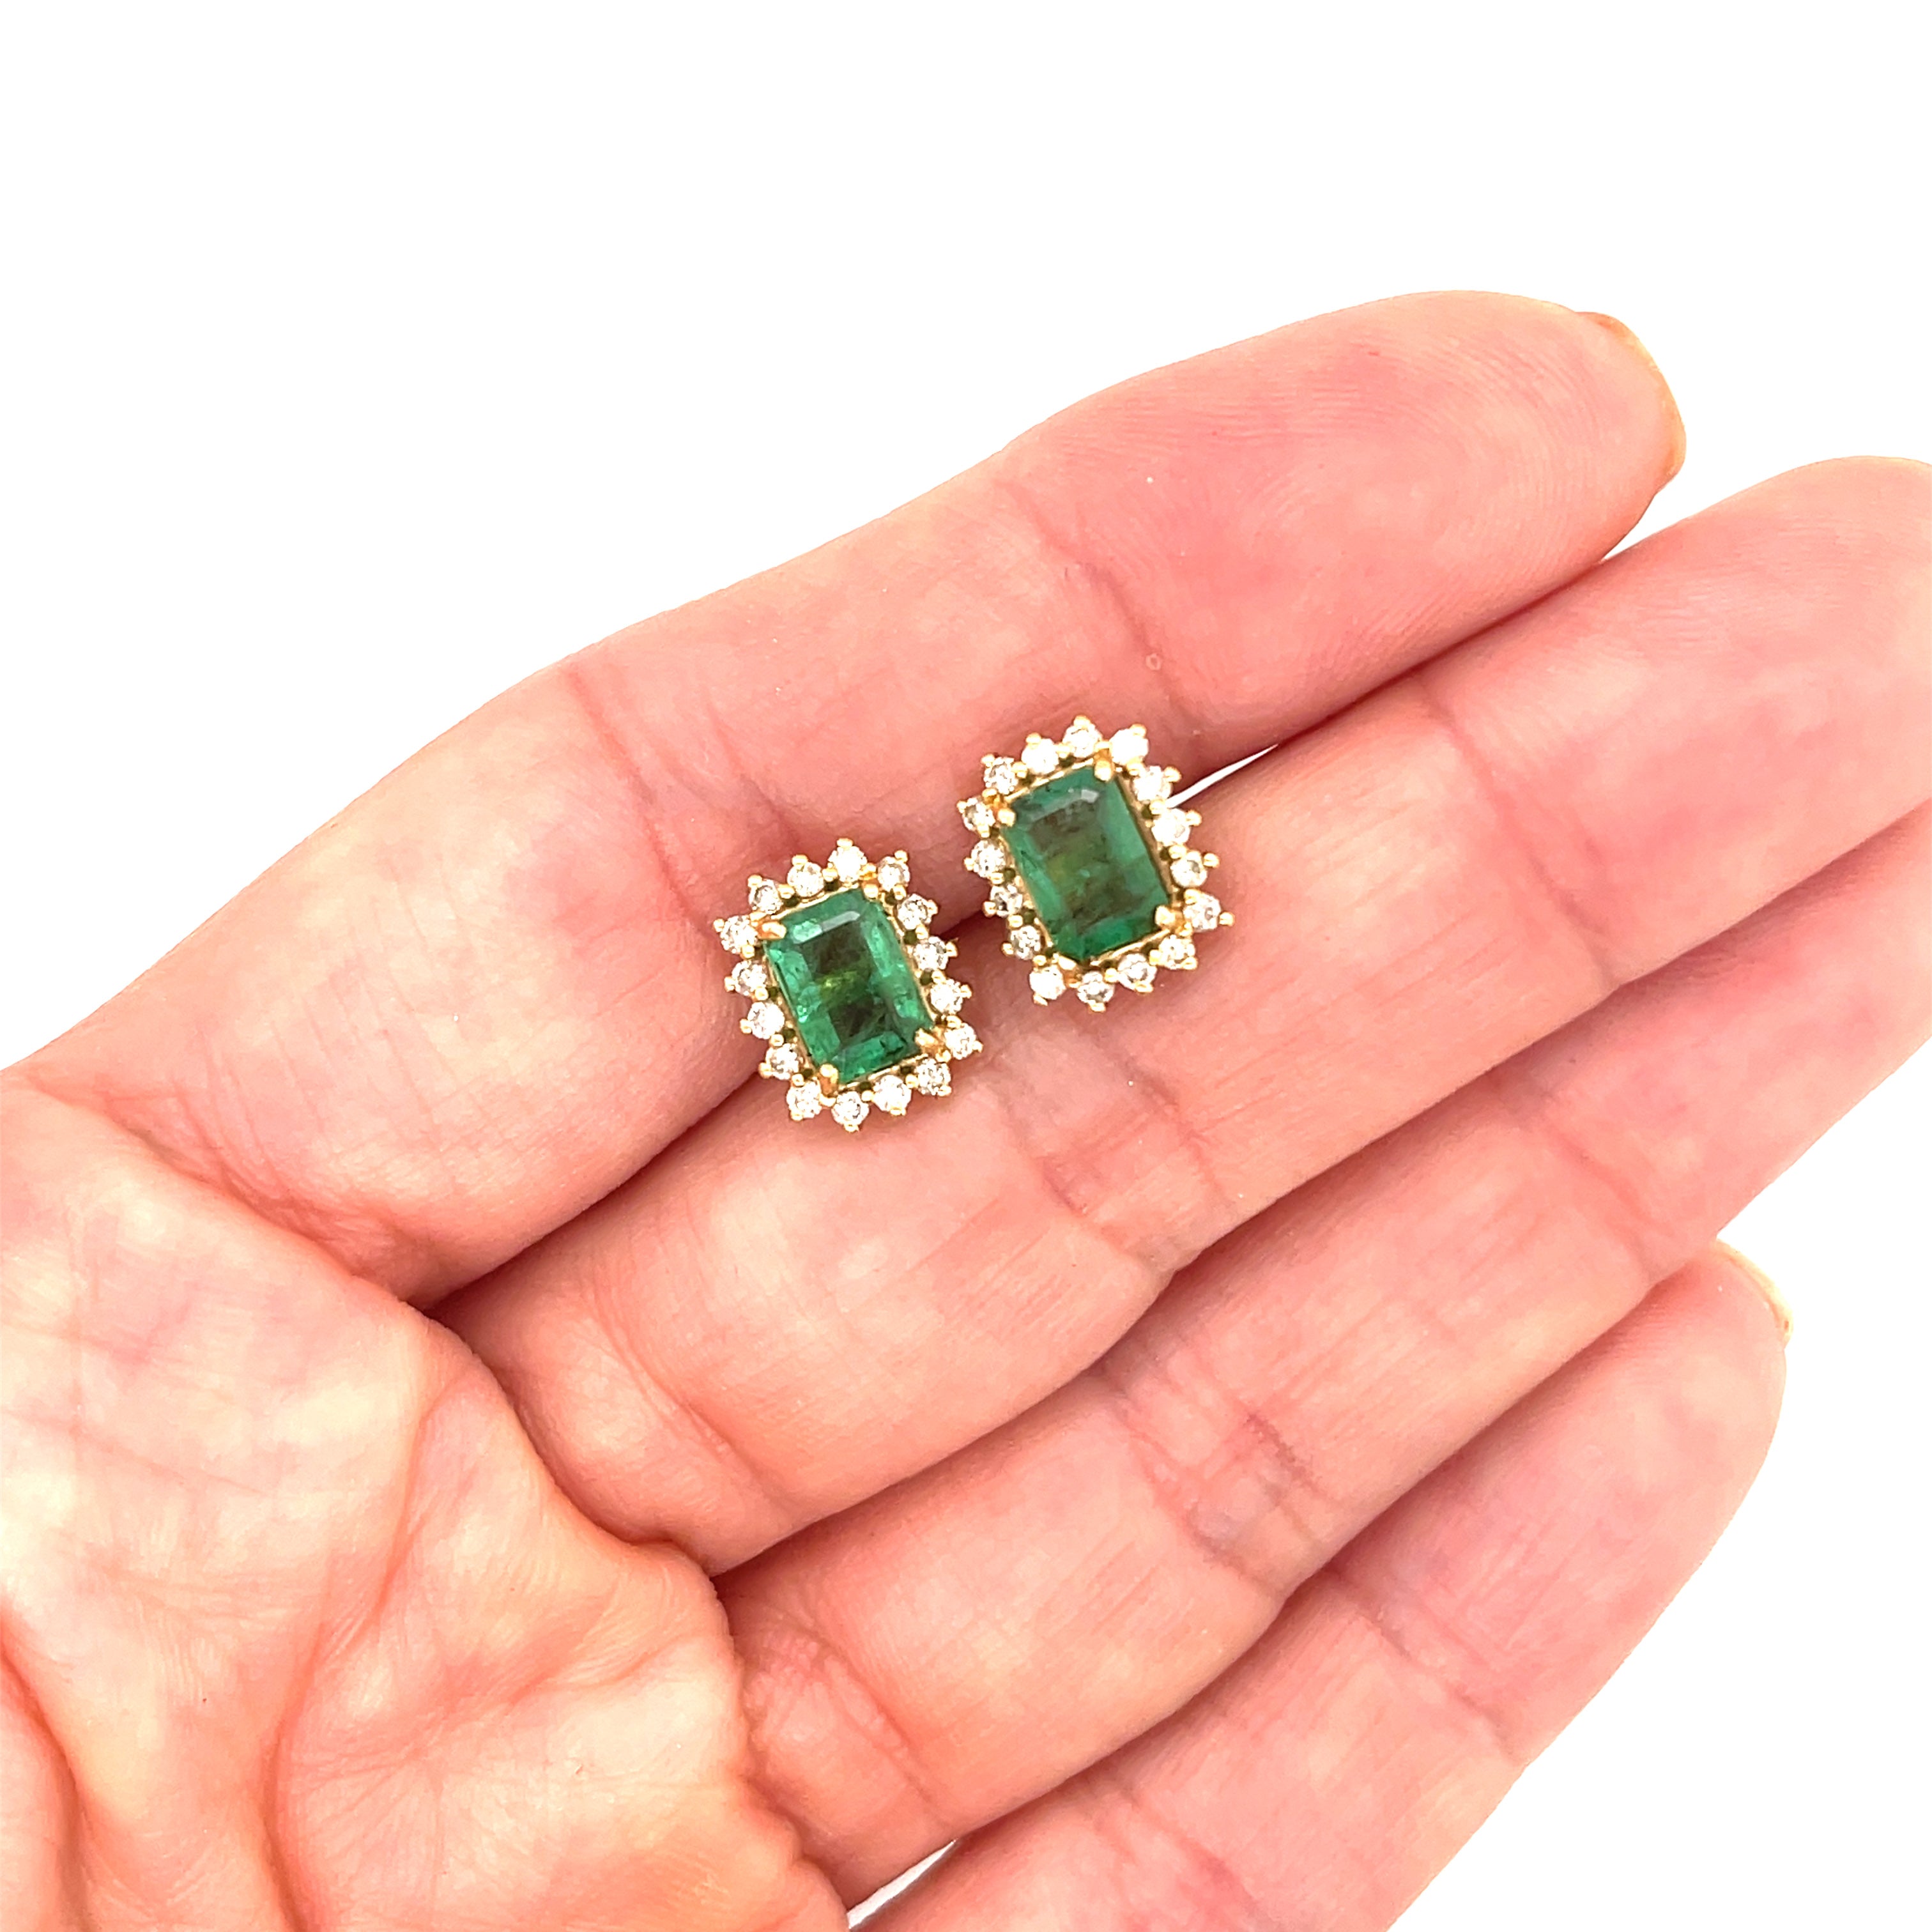 Square Emerald Earrings